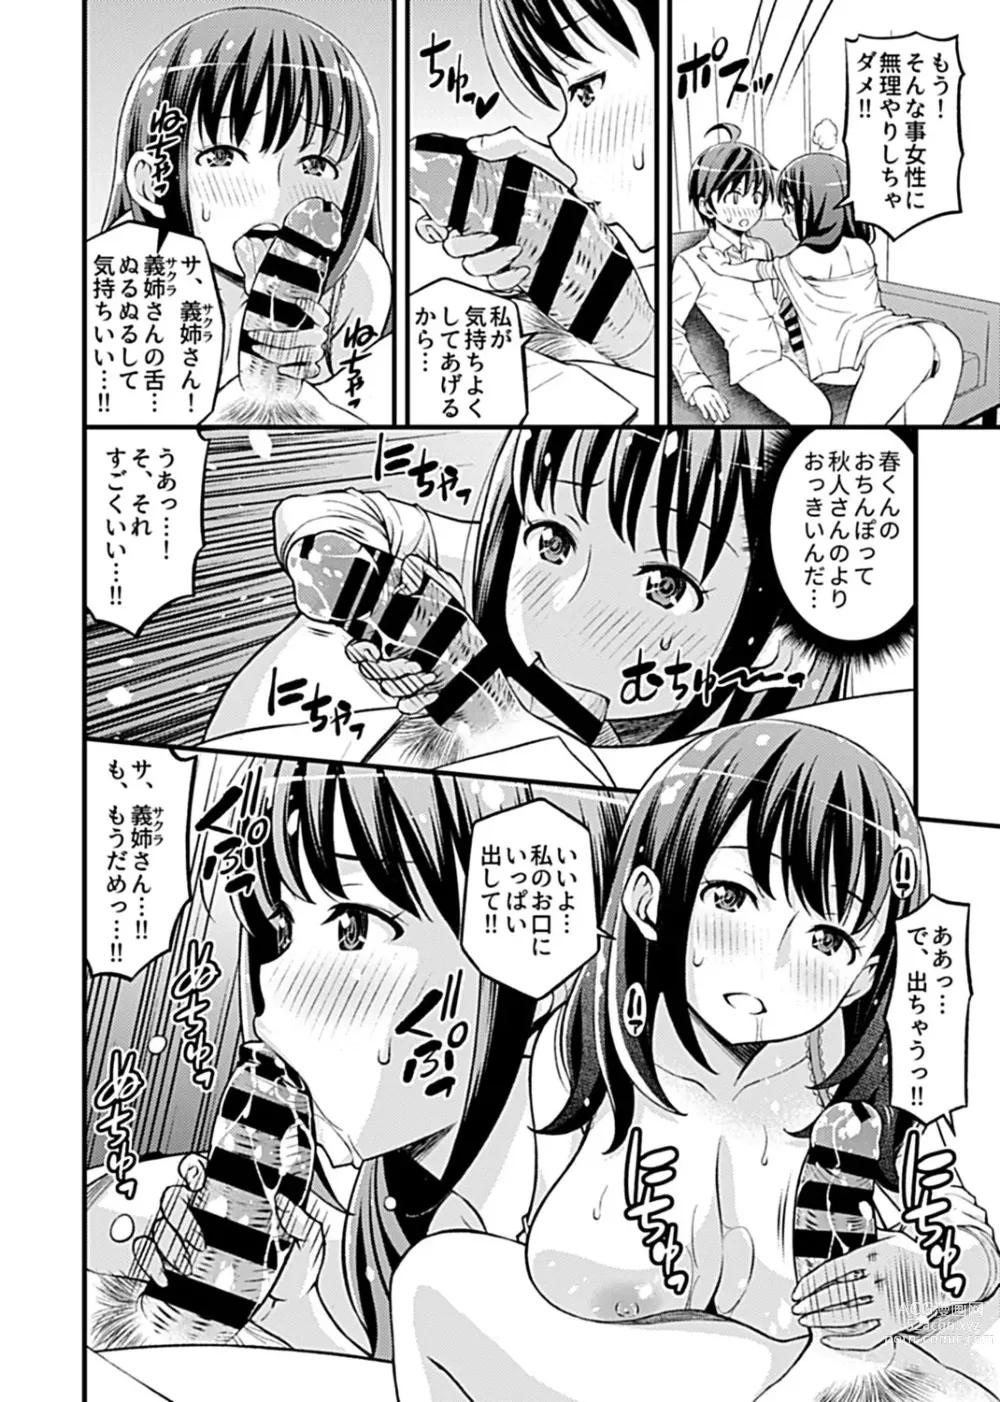 Page 196 of manga COMIC GEE Vol. 13